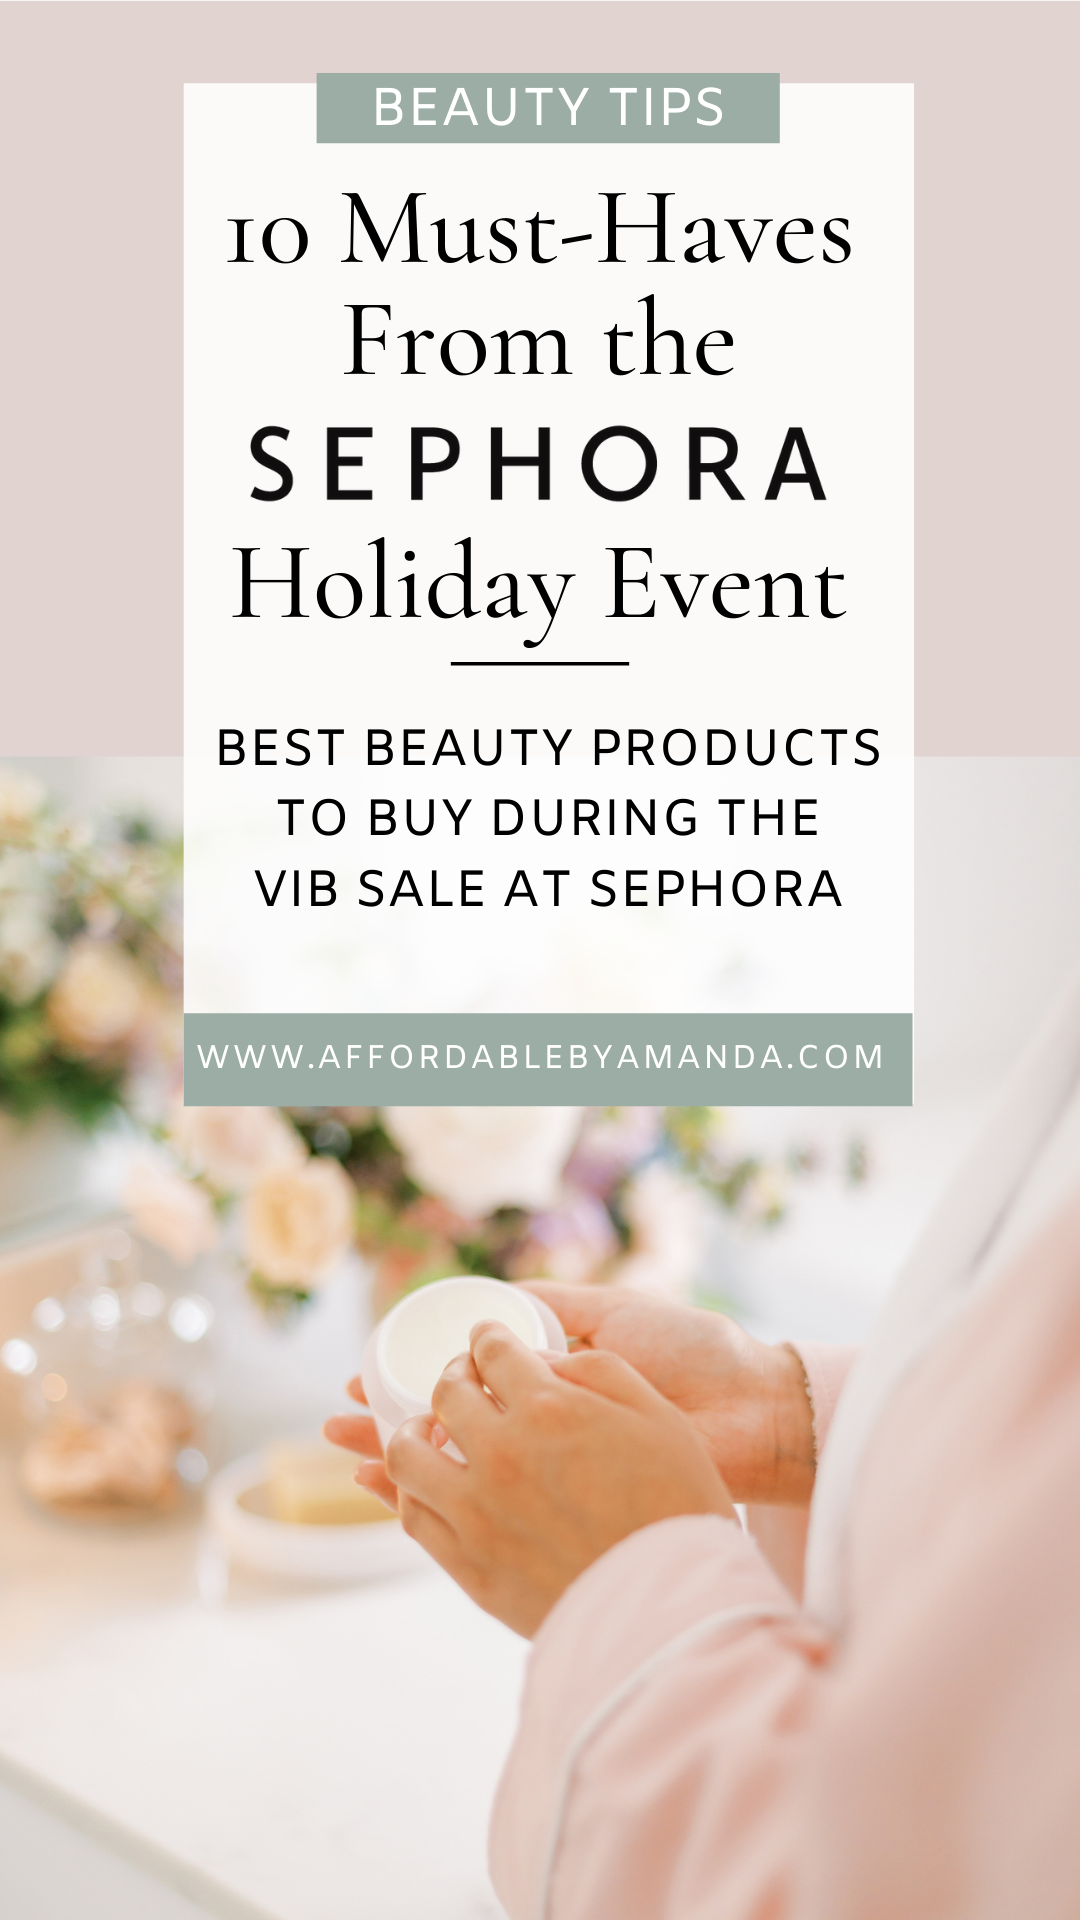 Sephora Holiday Event 2020 | Sephora Holiday Sets 2020 | Sephora Holiday Savings Event